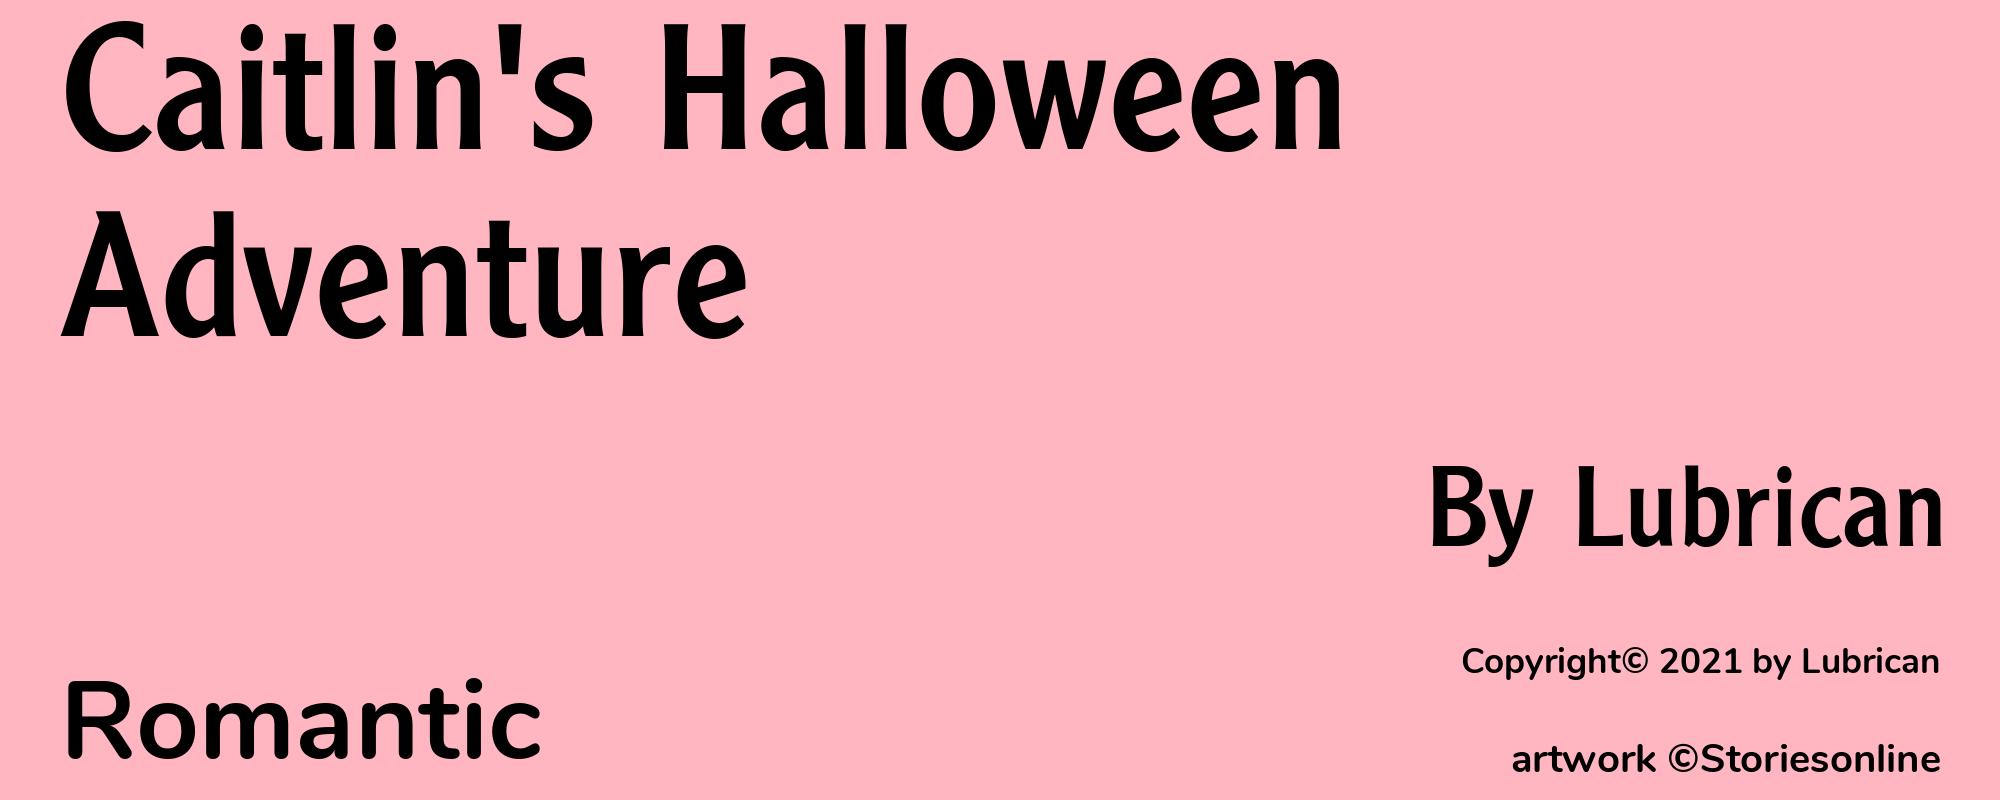 Caitlin's Halloween Adventure - Cover